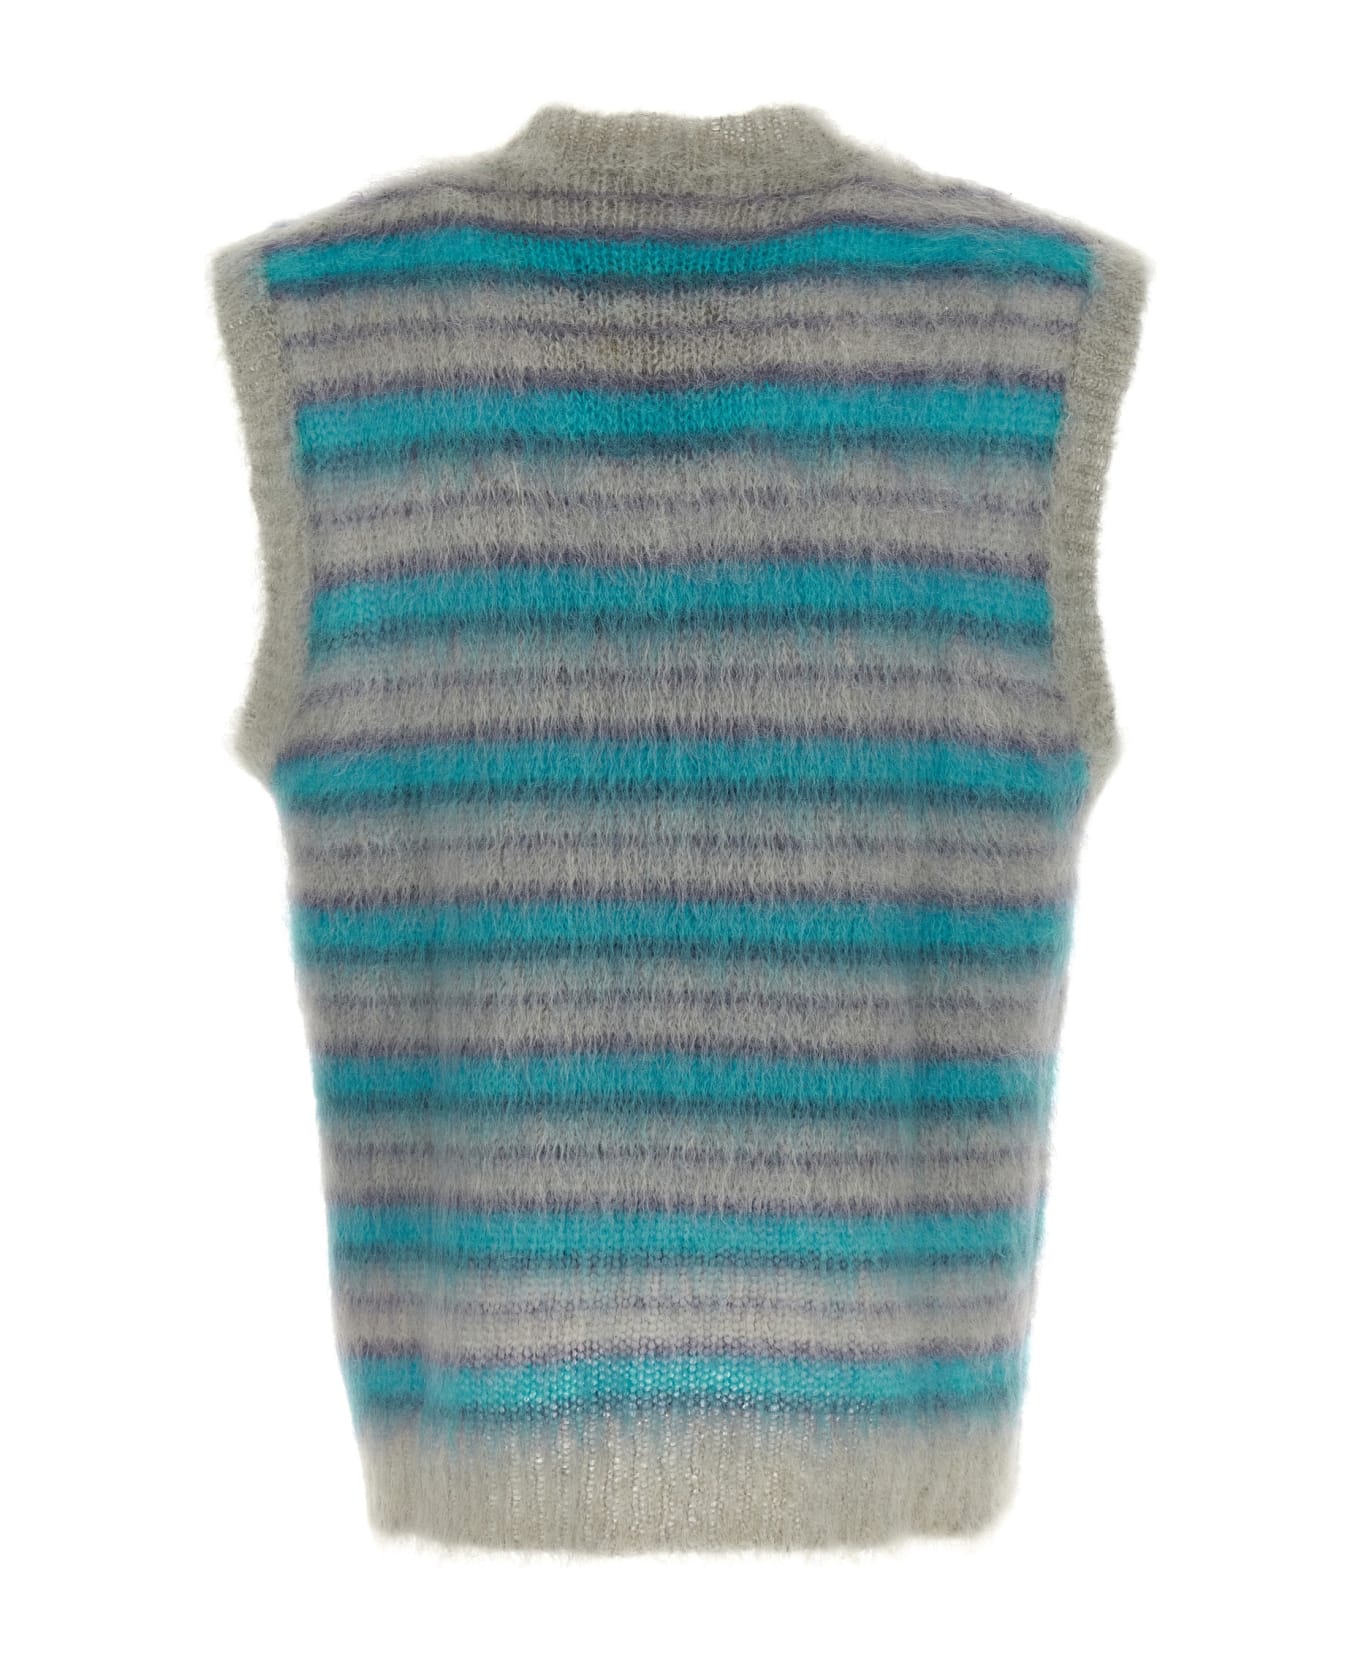 Marni 'brushed Stripes Fuzzy Wuzzy' Vest - TITANIUM